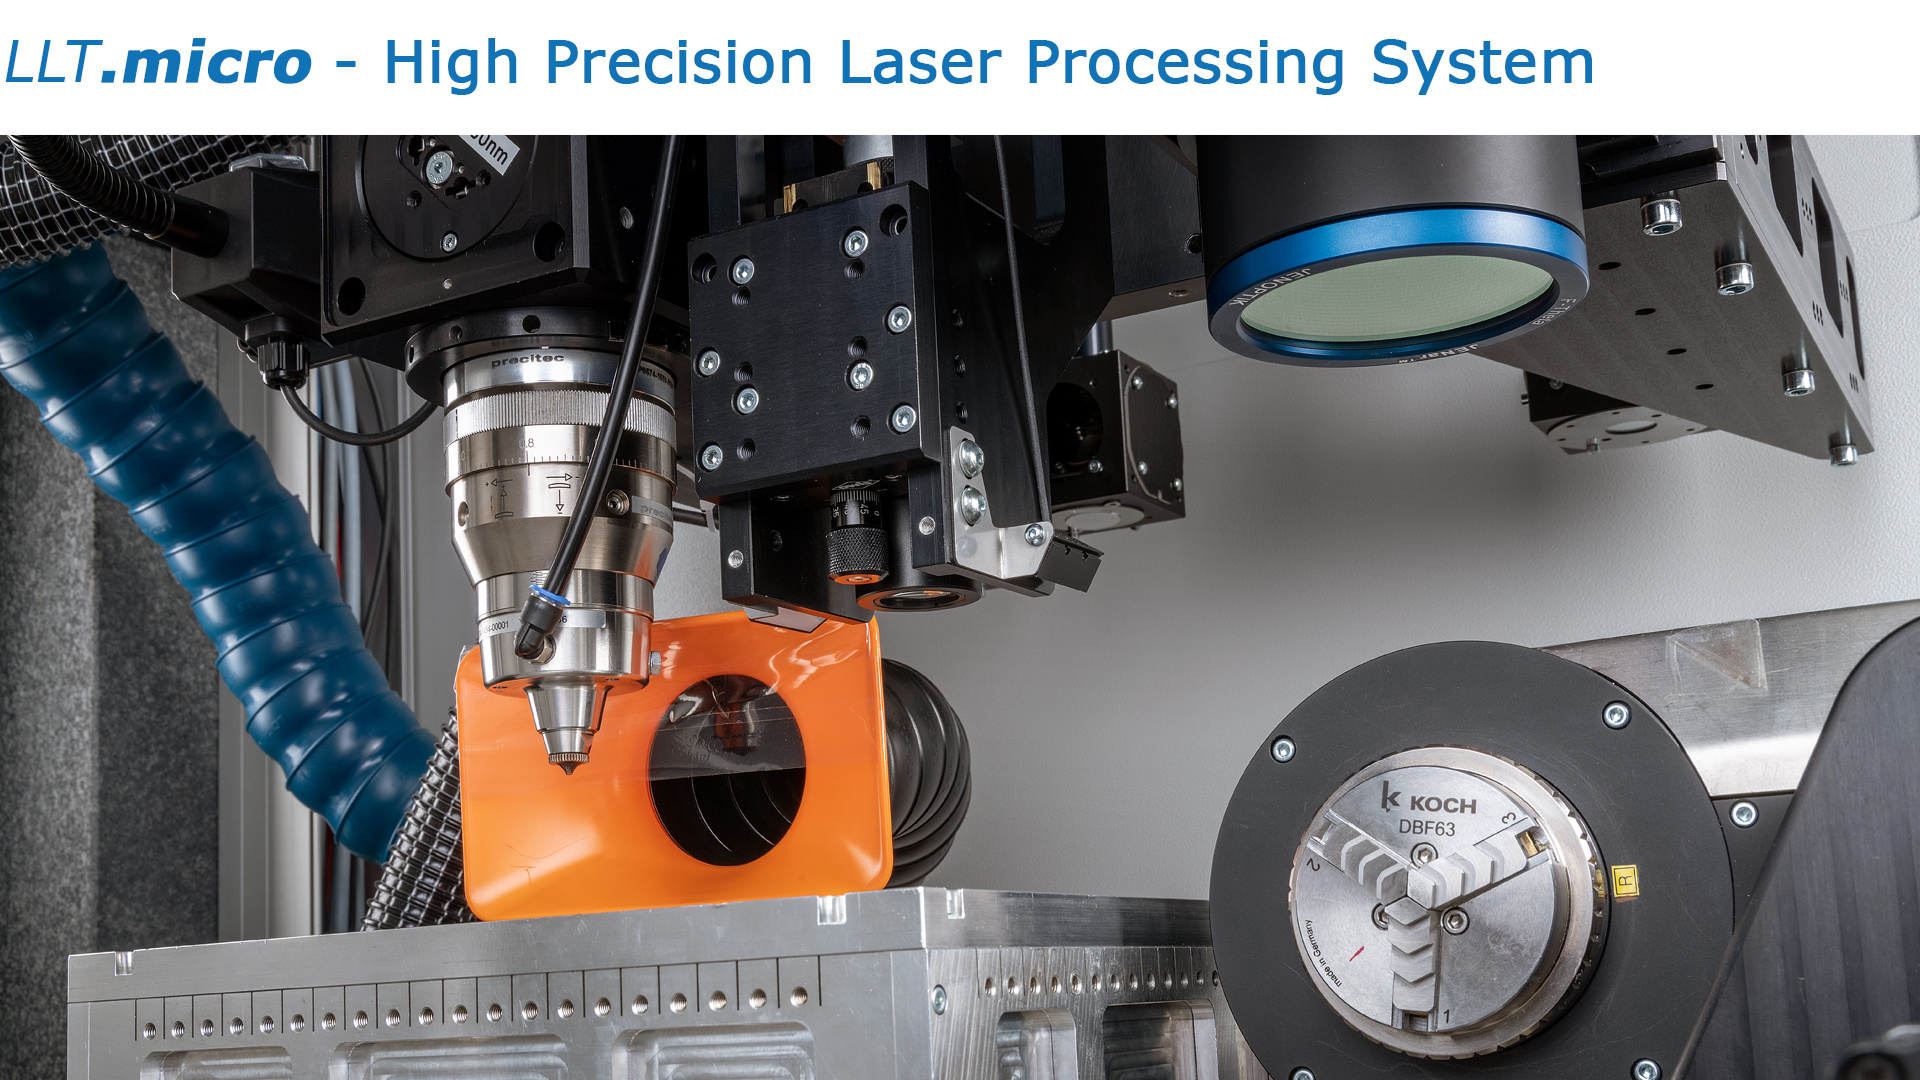 𝘓𝘓𝘛.𝙢𝙞𝙘𝙧𝙤 - High Precision Laser Machining System